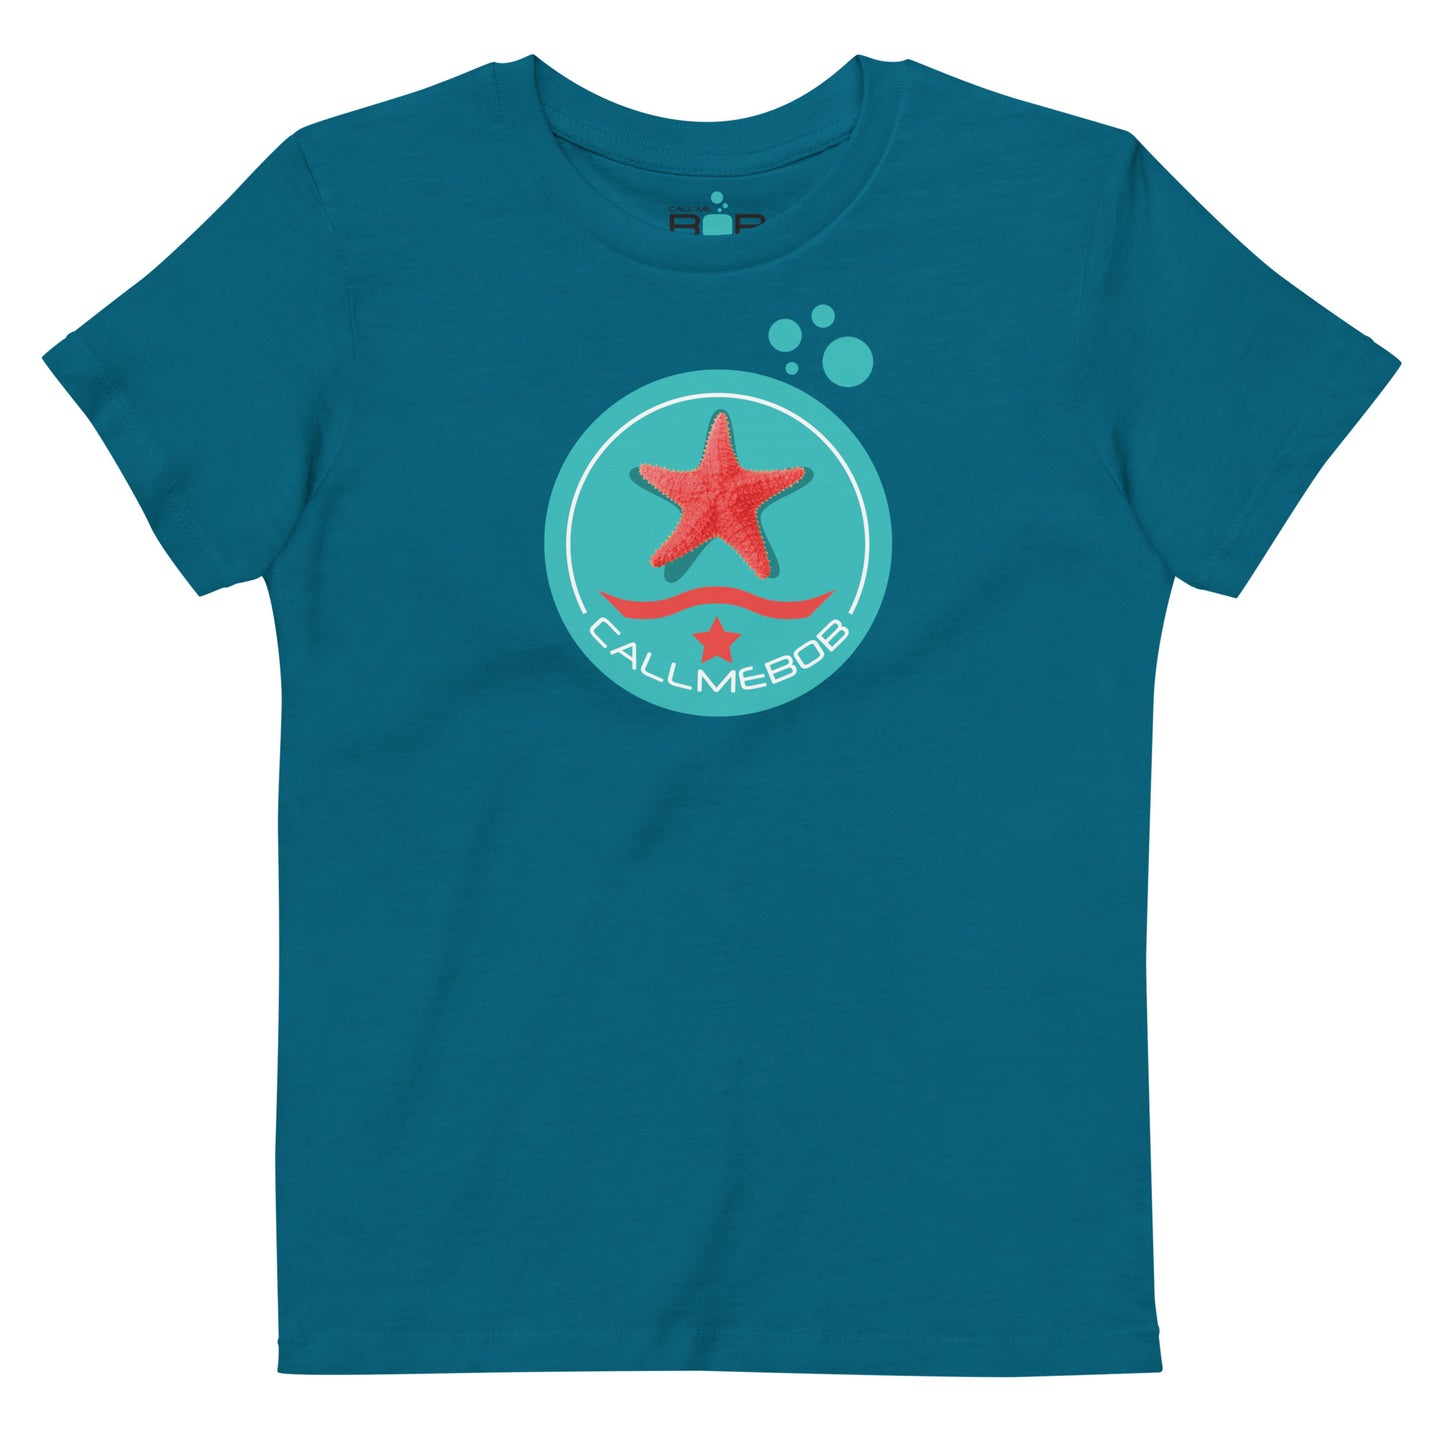 One Star, boy's organic cotton t-shirt